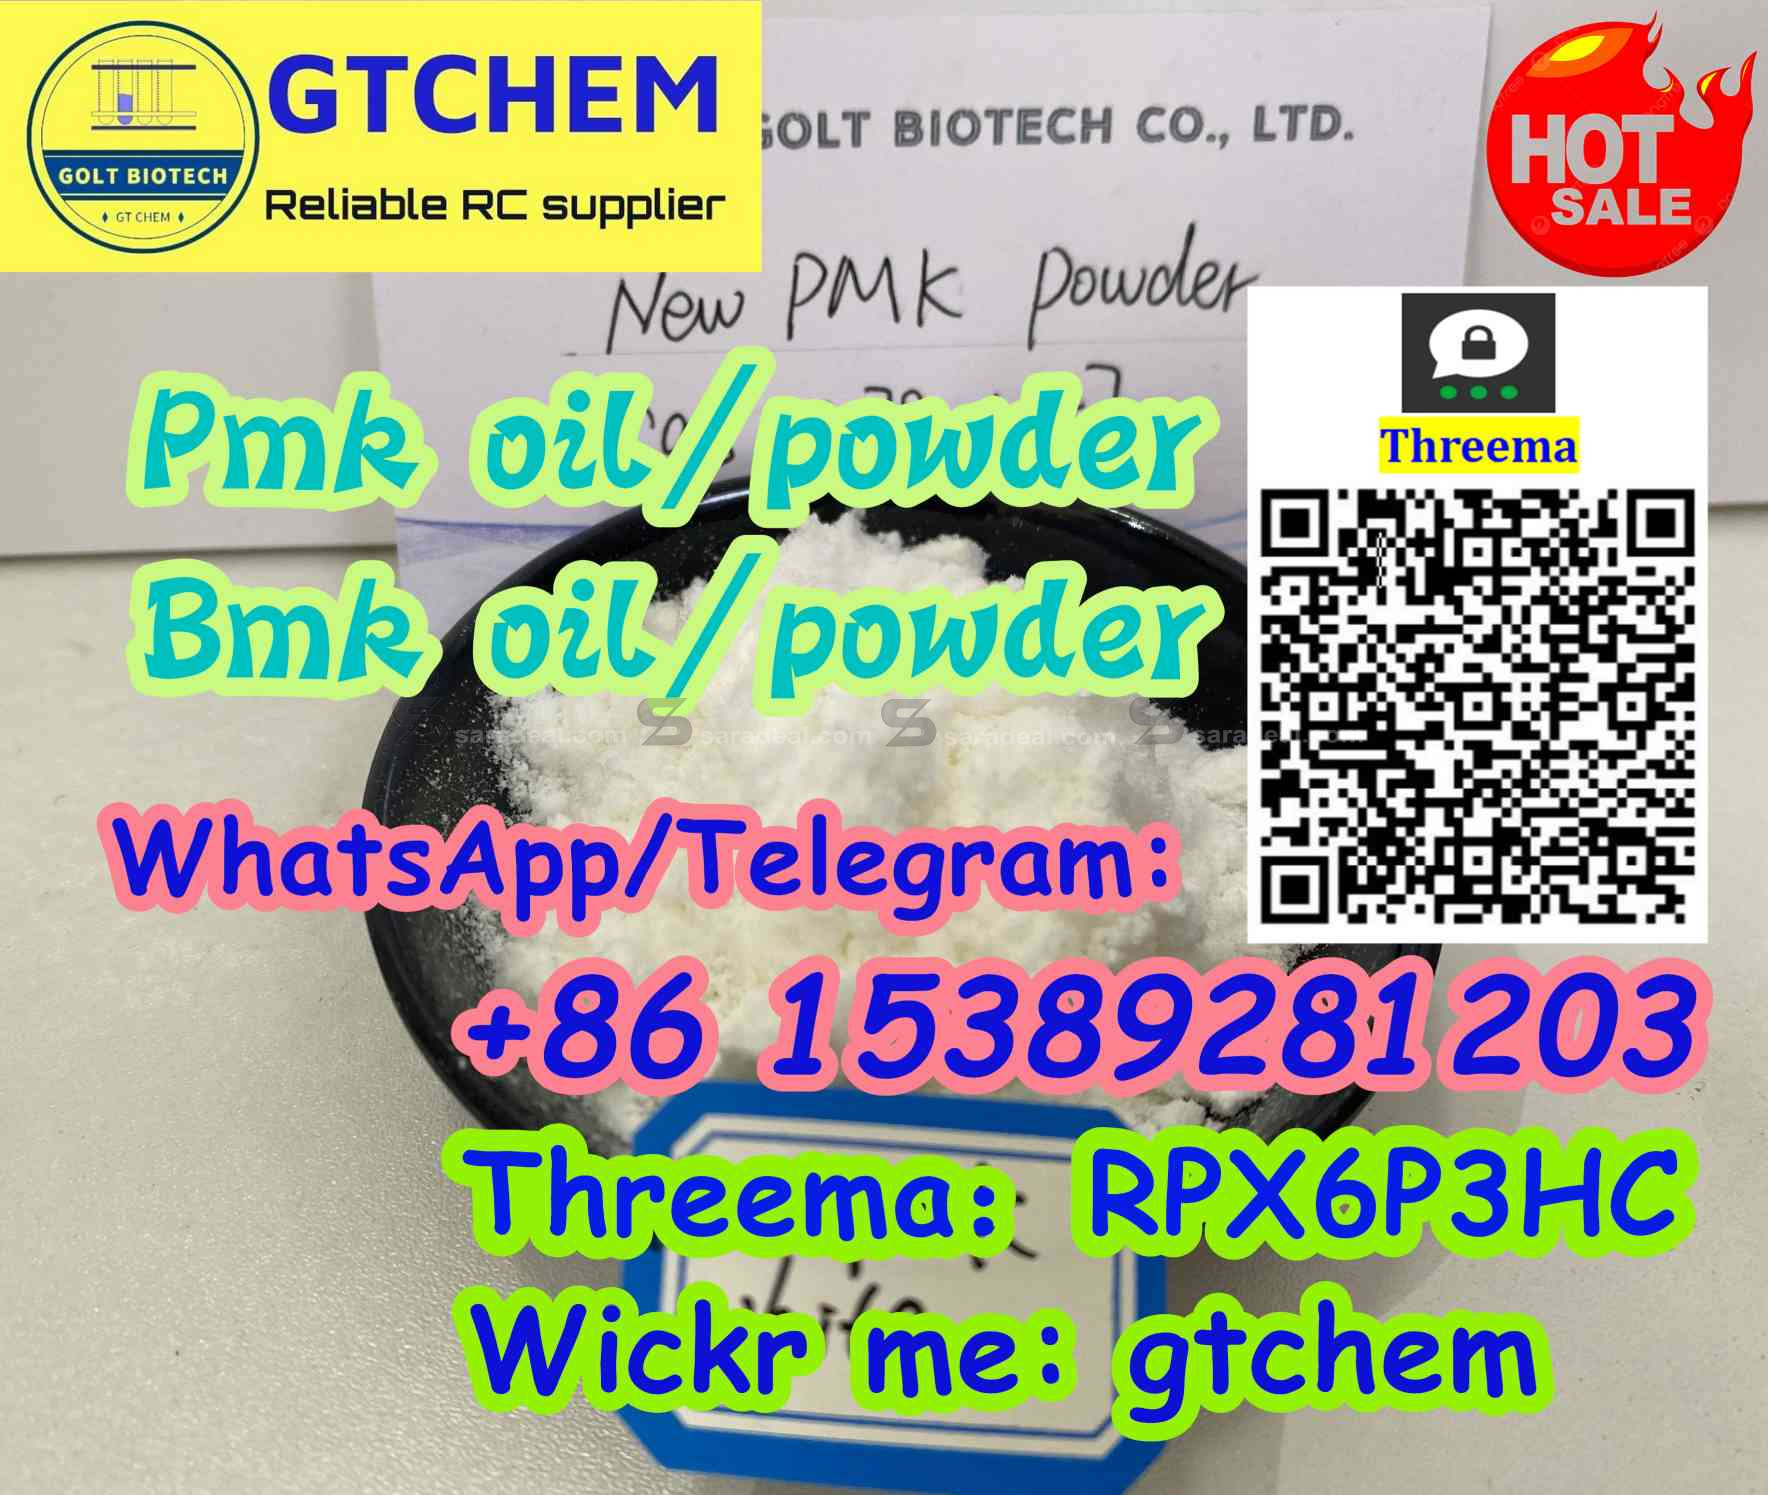 Factory price Pmk Glycidate powder Cas 28578-16-7